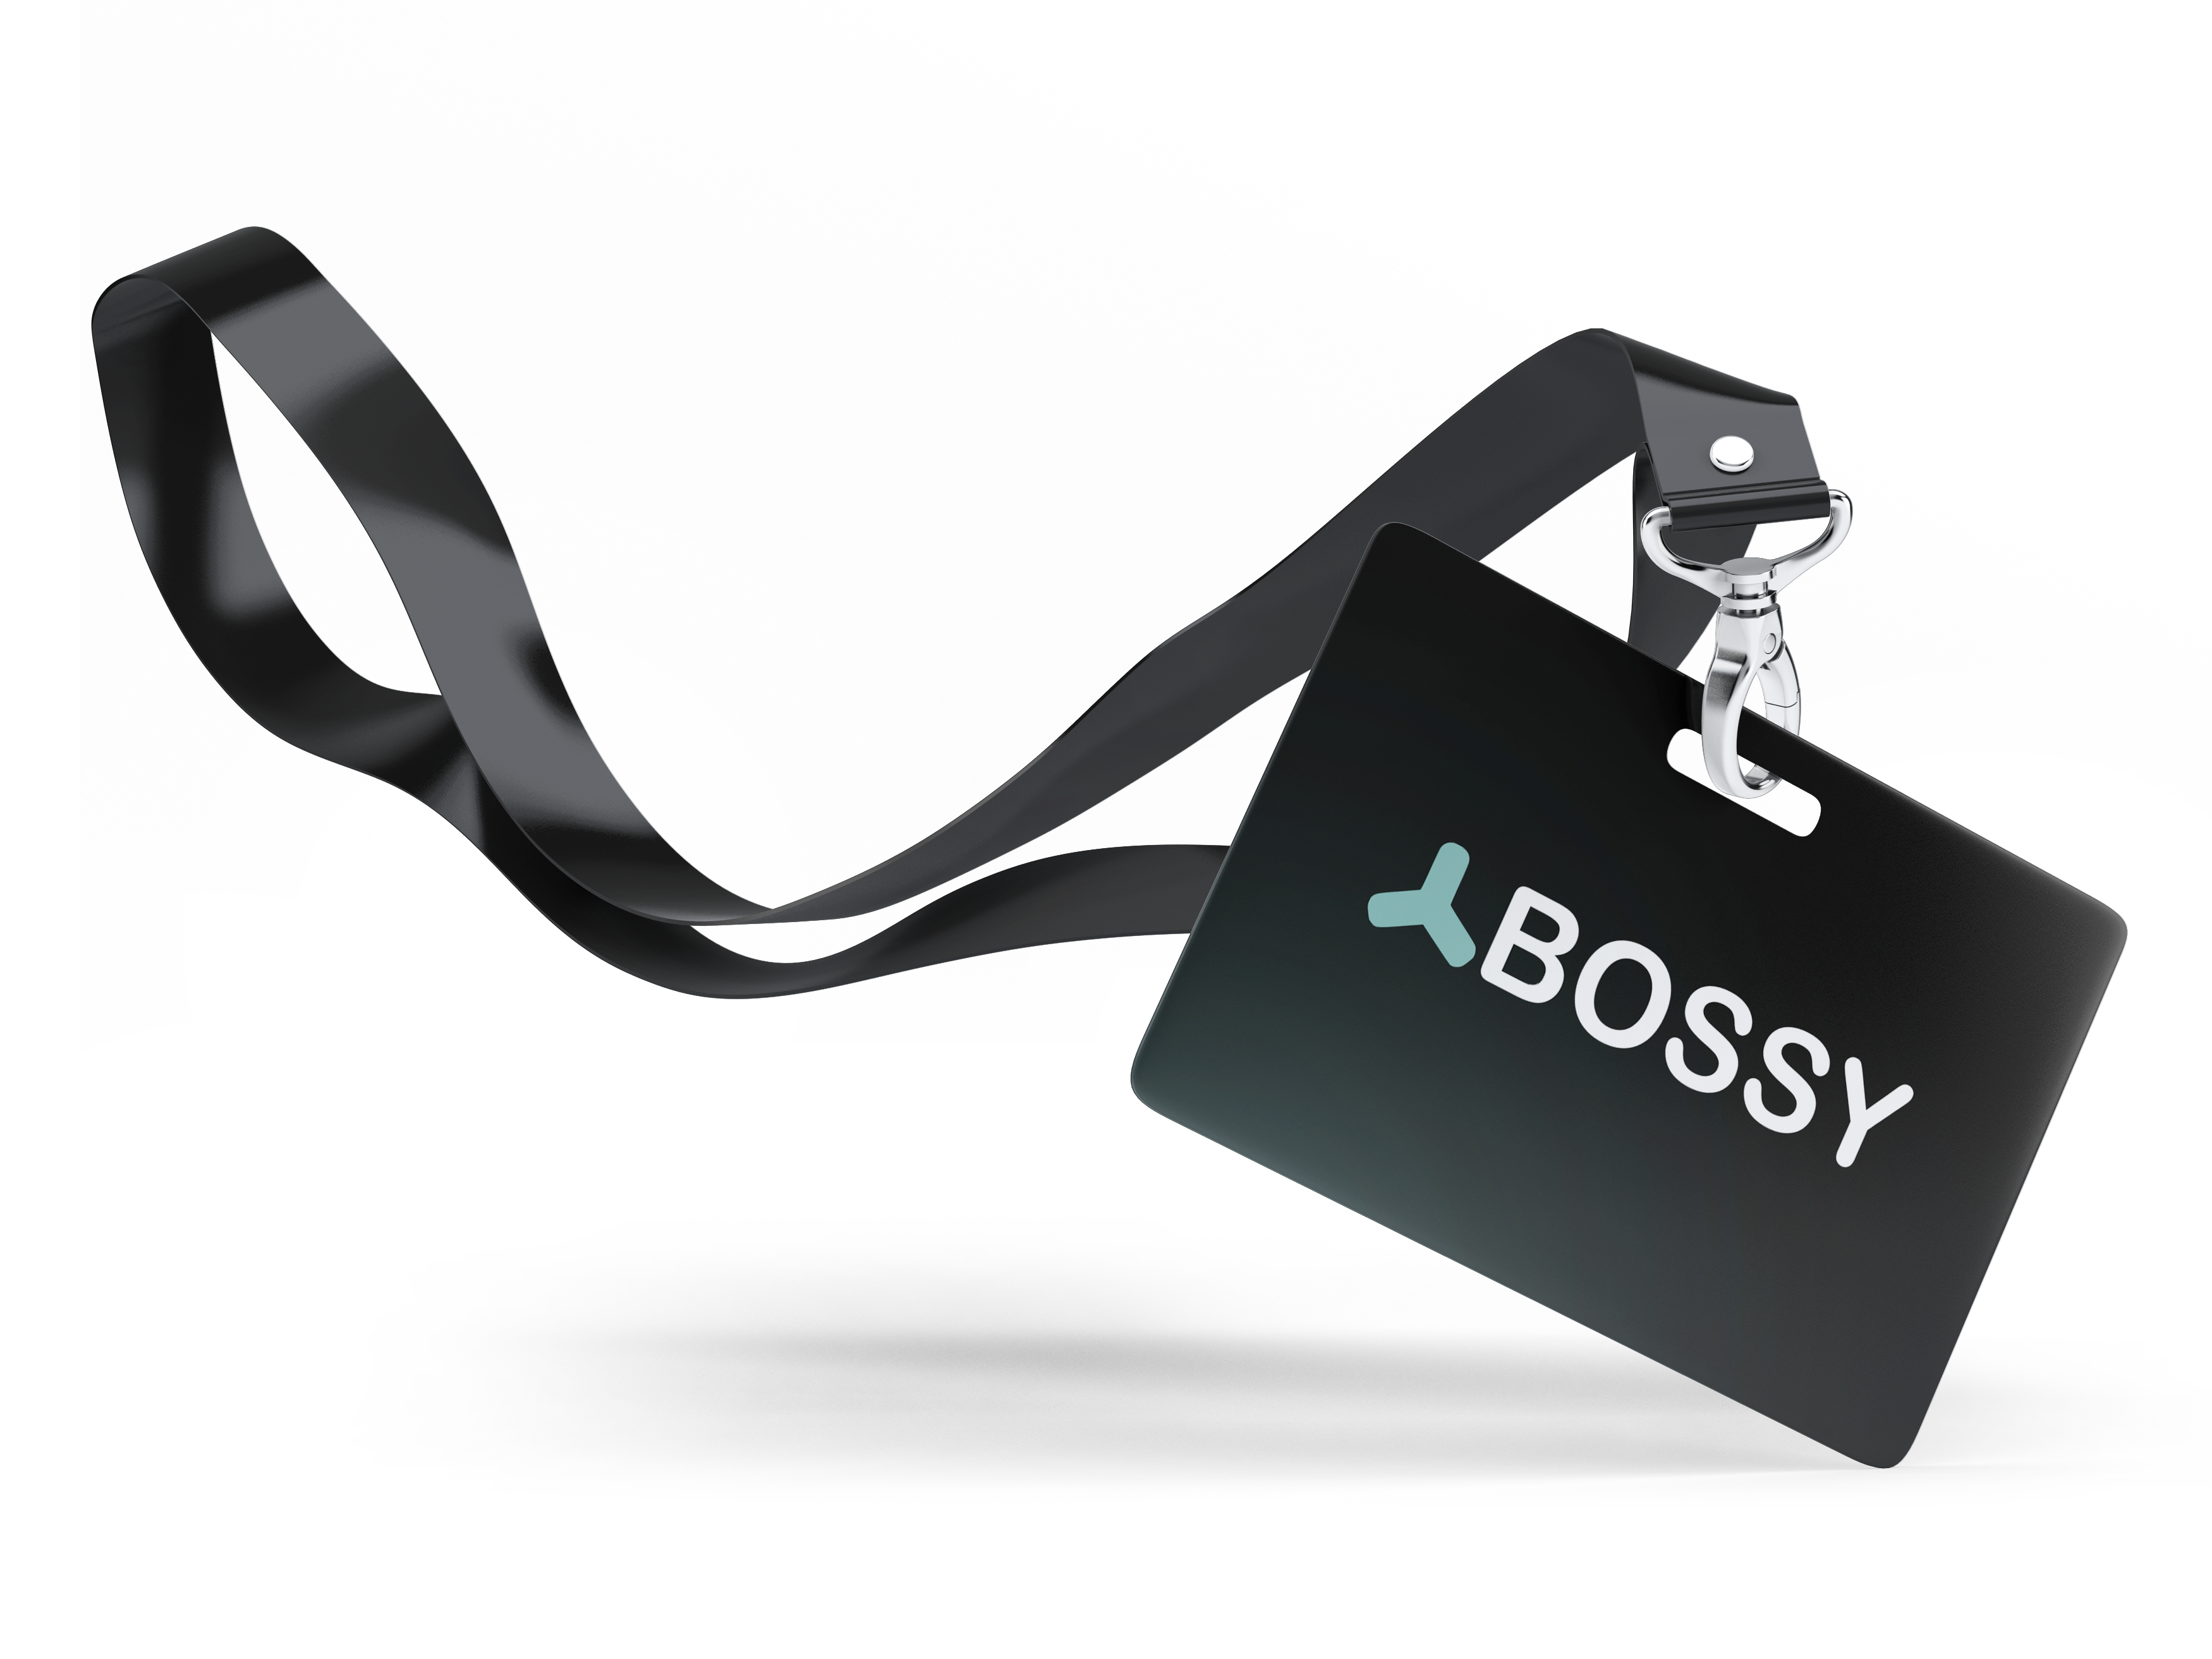 Bossy | Career